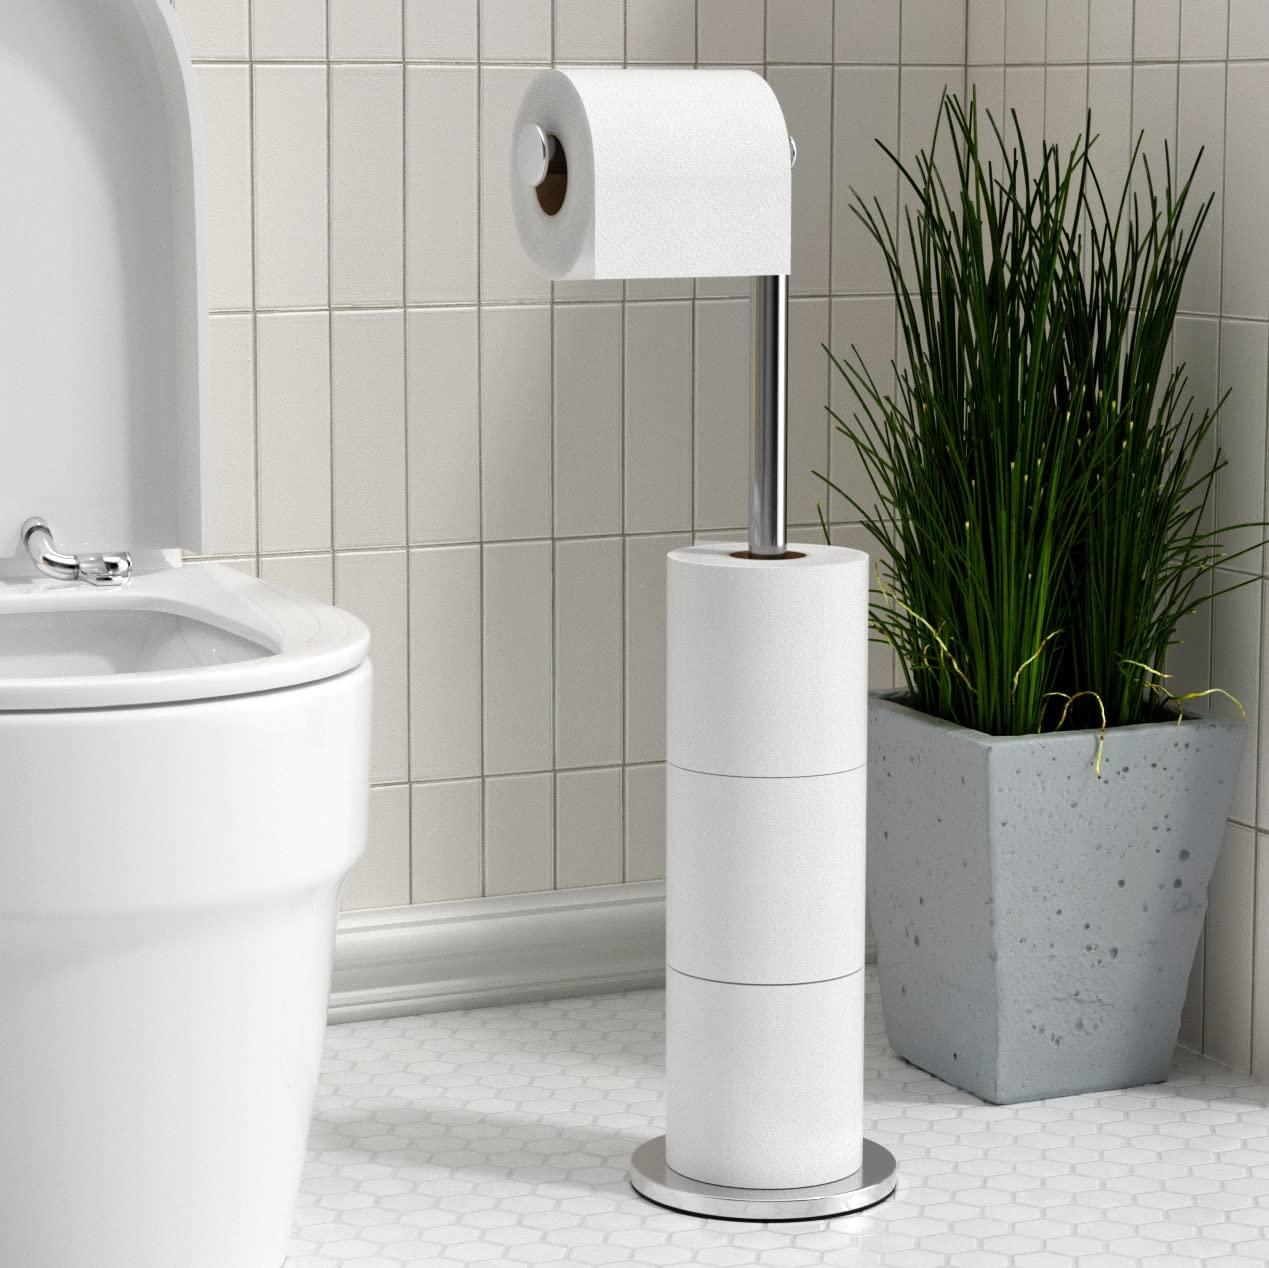 Freestanding Toilet Roll Holders Folding Paper Holder Stainless Steel Bathroom Stand, Anti Rust Pedestal Free Standing Storage Dispenser Holds 5